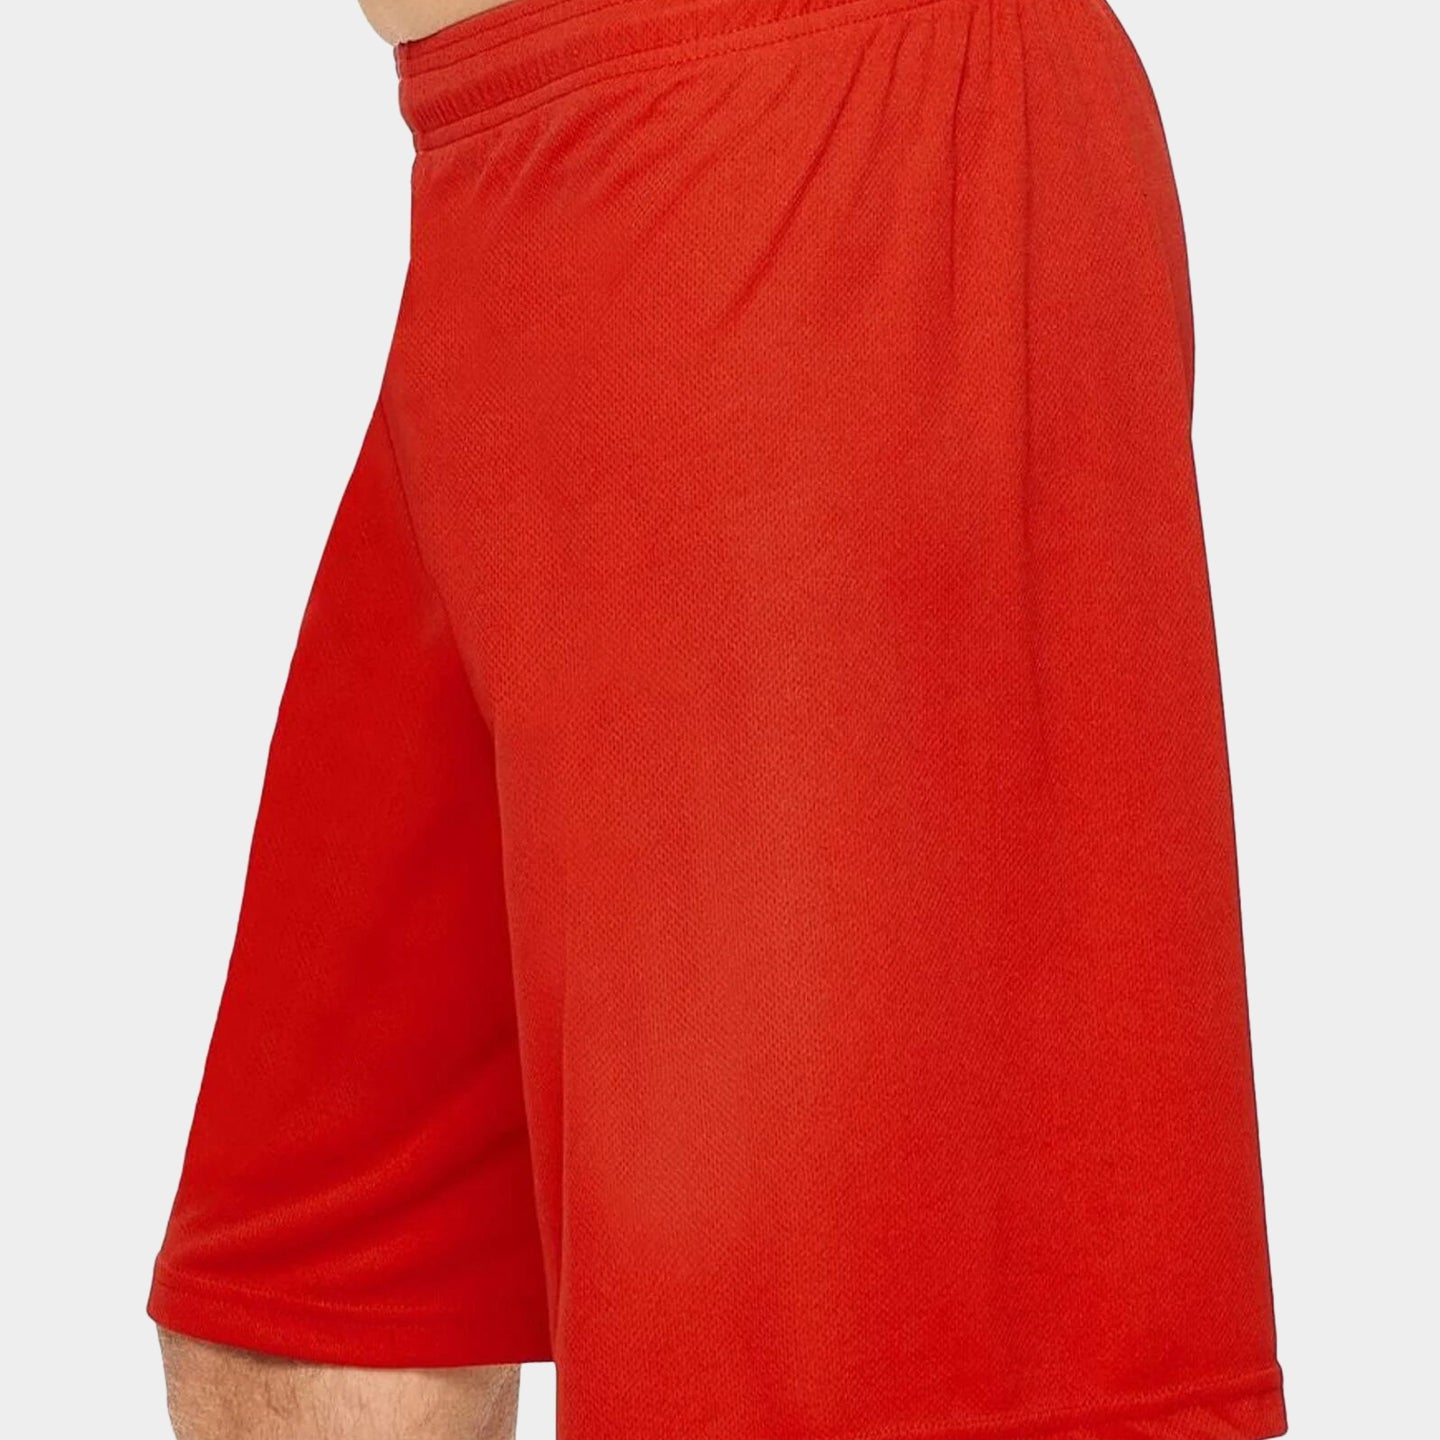 Expert Brand Oxymesh Men's Performance Training Shorts, XL, Red A1